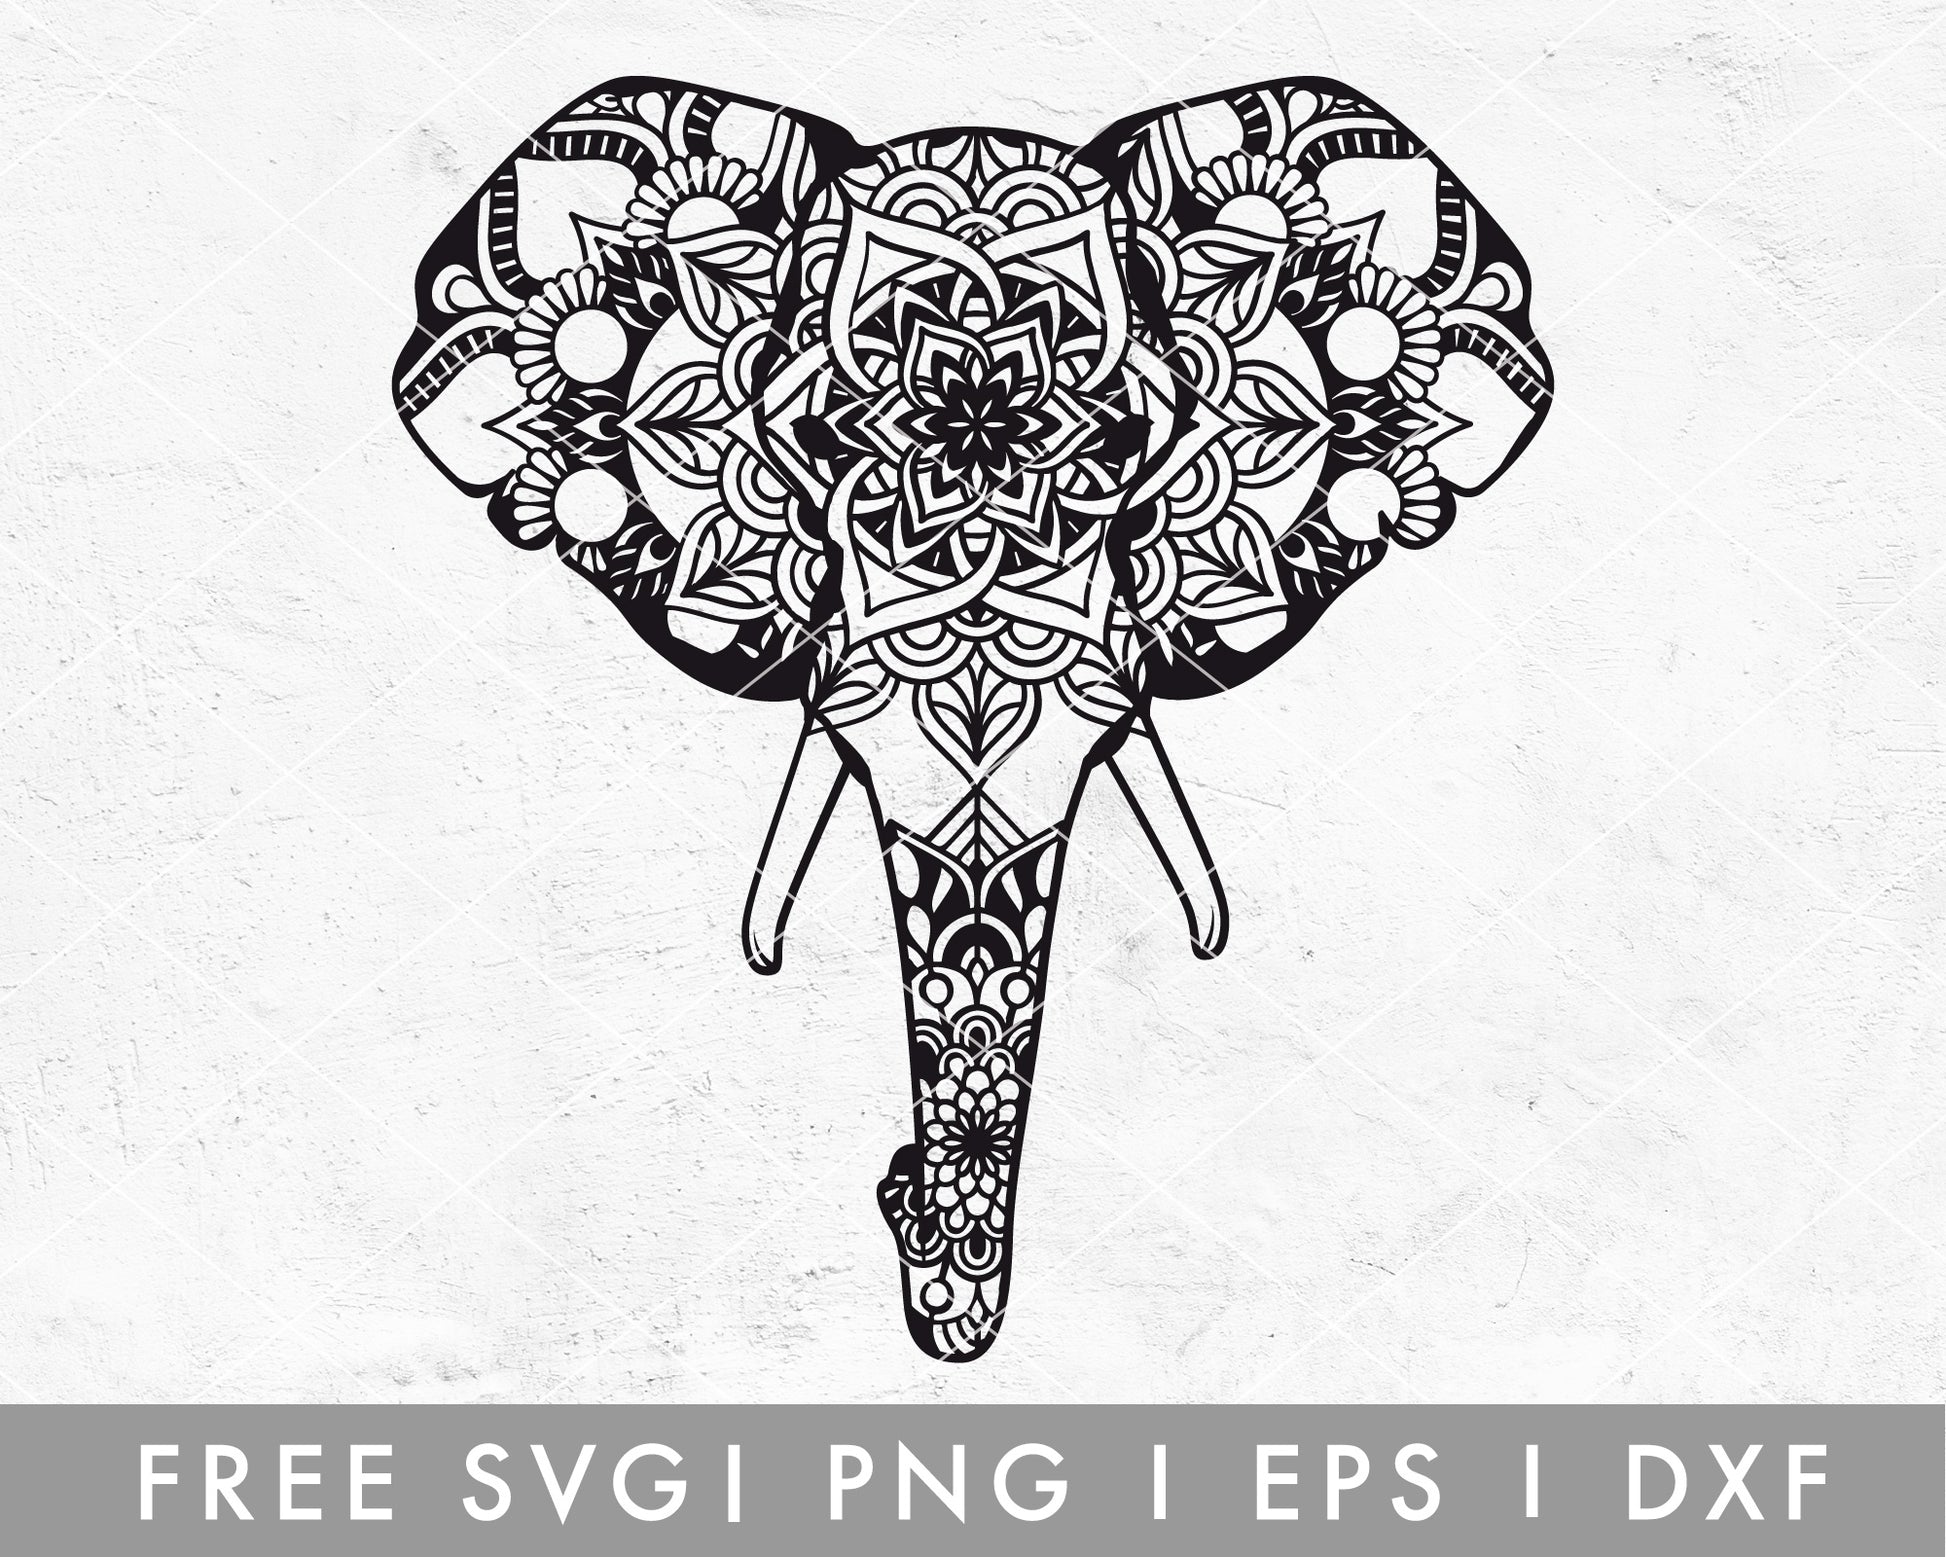 FREE FREE Gnomes SVG | Leopard Pattern SVG Cut File for Cricut, Cameo Silhouette | Free SVG Cut File